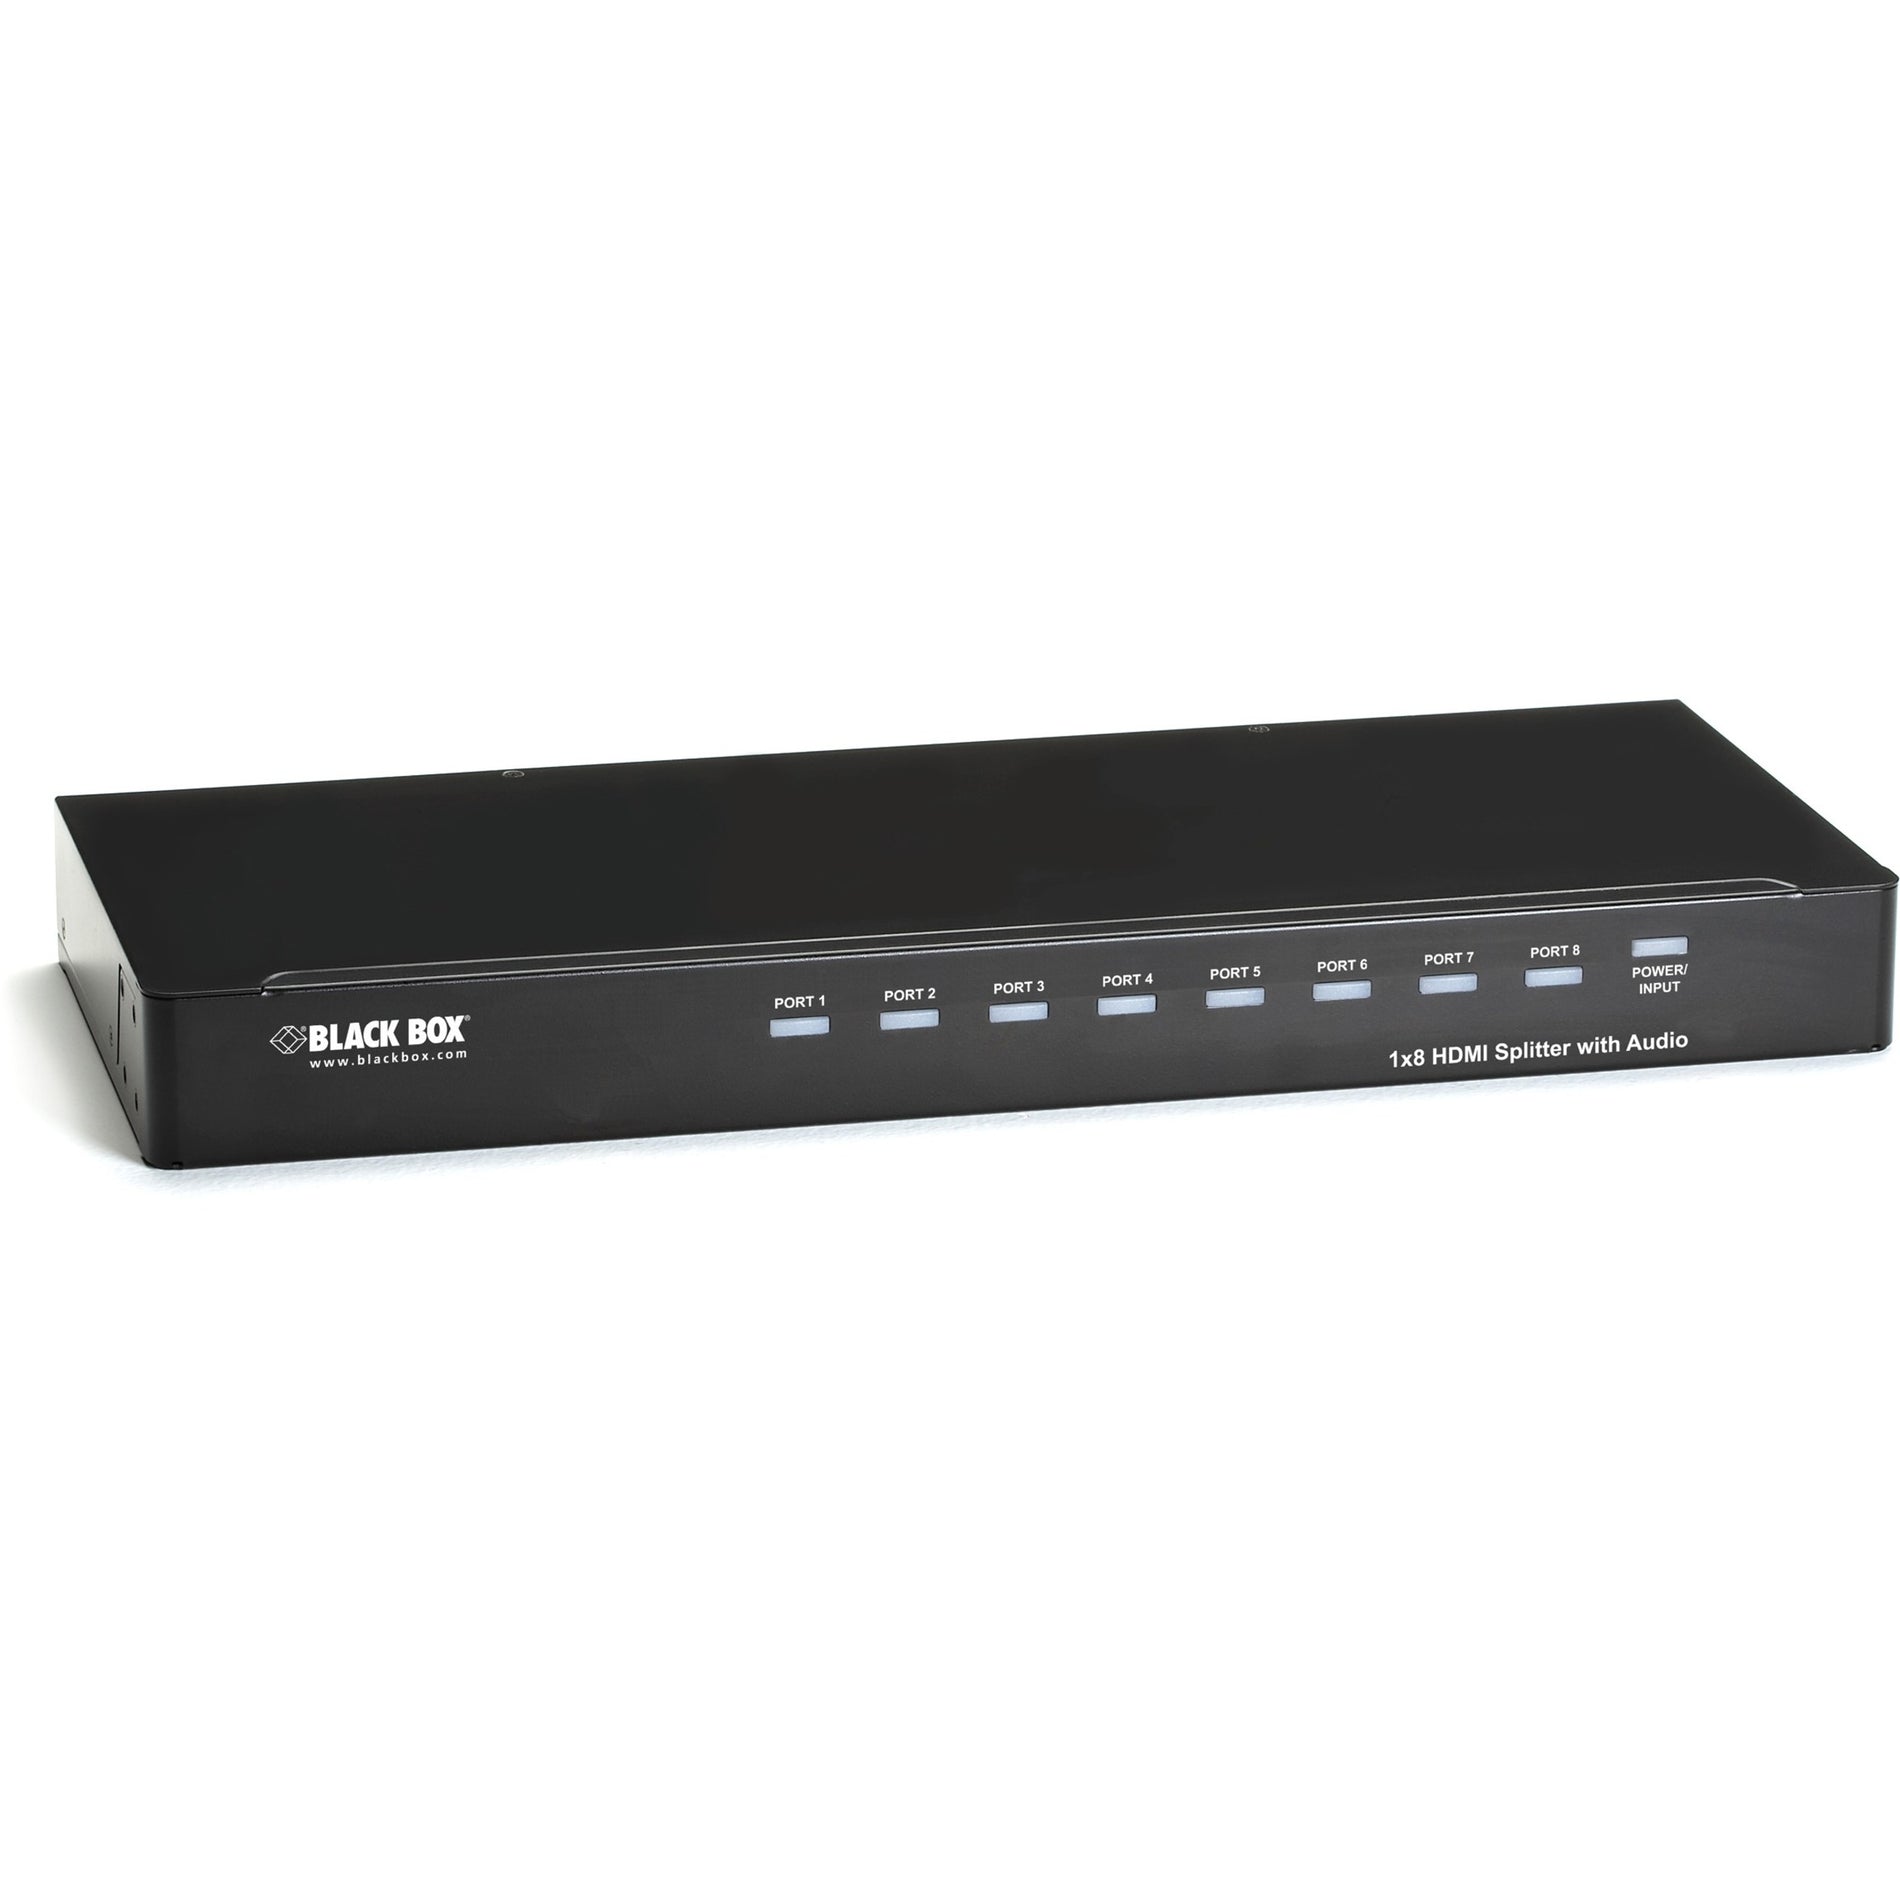 Black Box AVSP-HDMI1X8 1 x 8 HDMI Splitter with Audio, Fully HDCP Compliant, Blu-ray Ready, Easy Setup